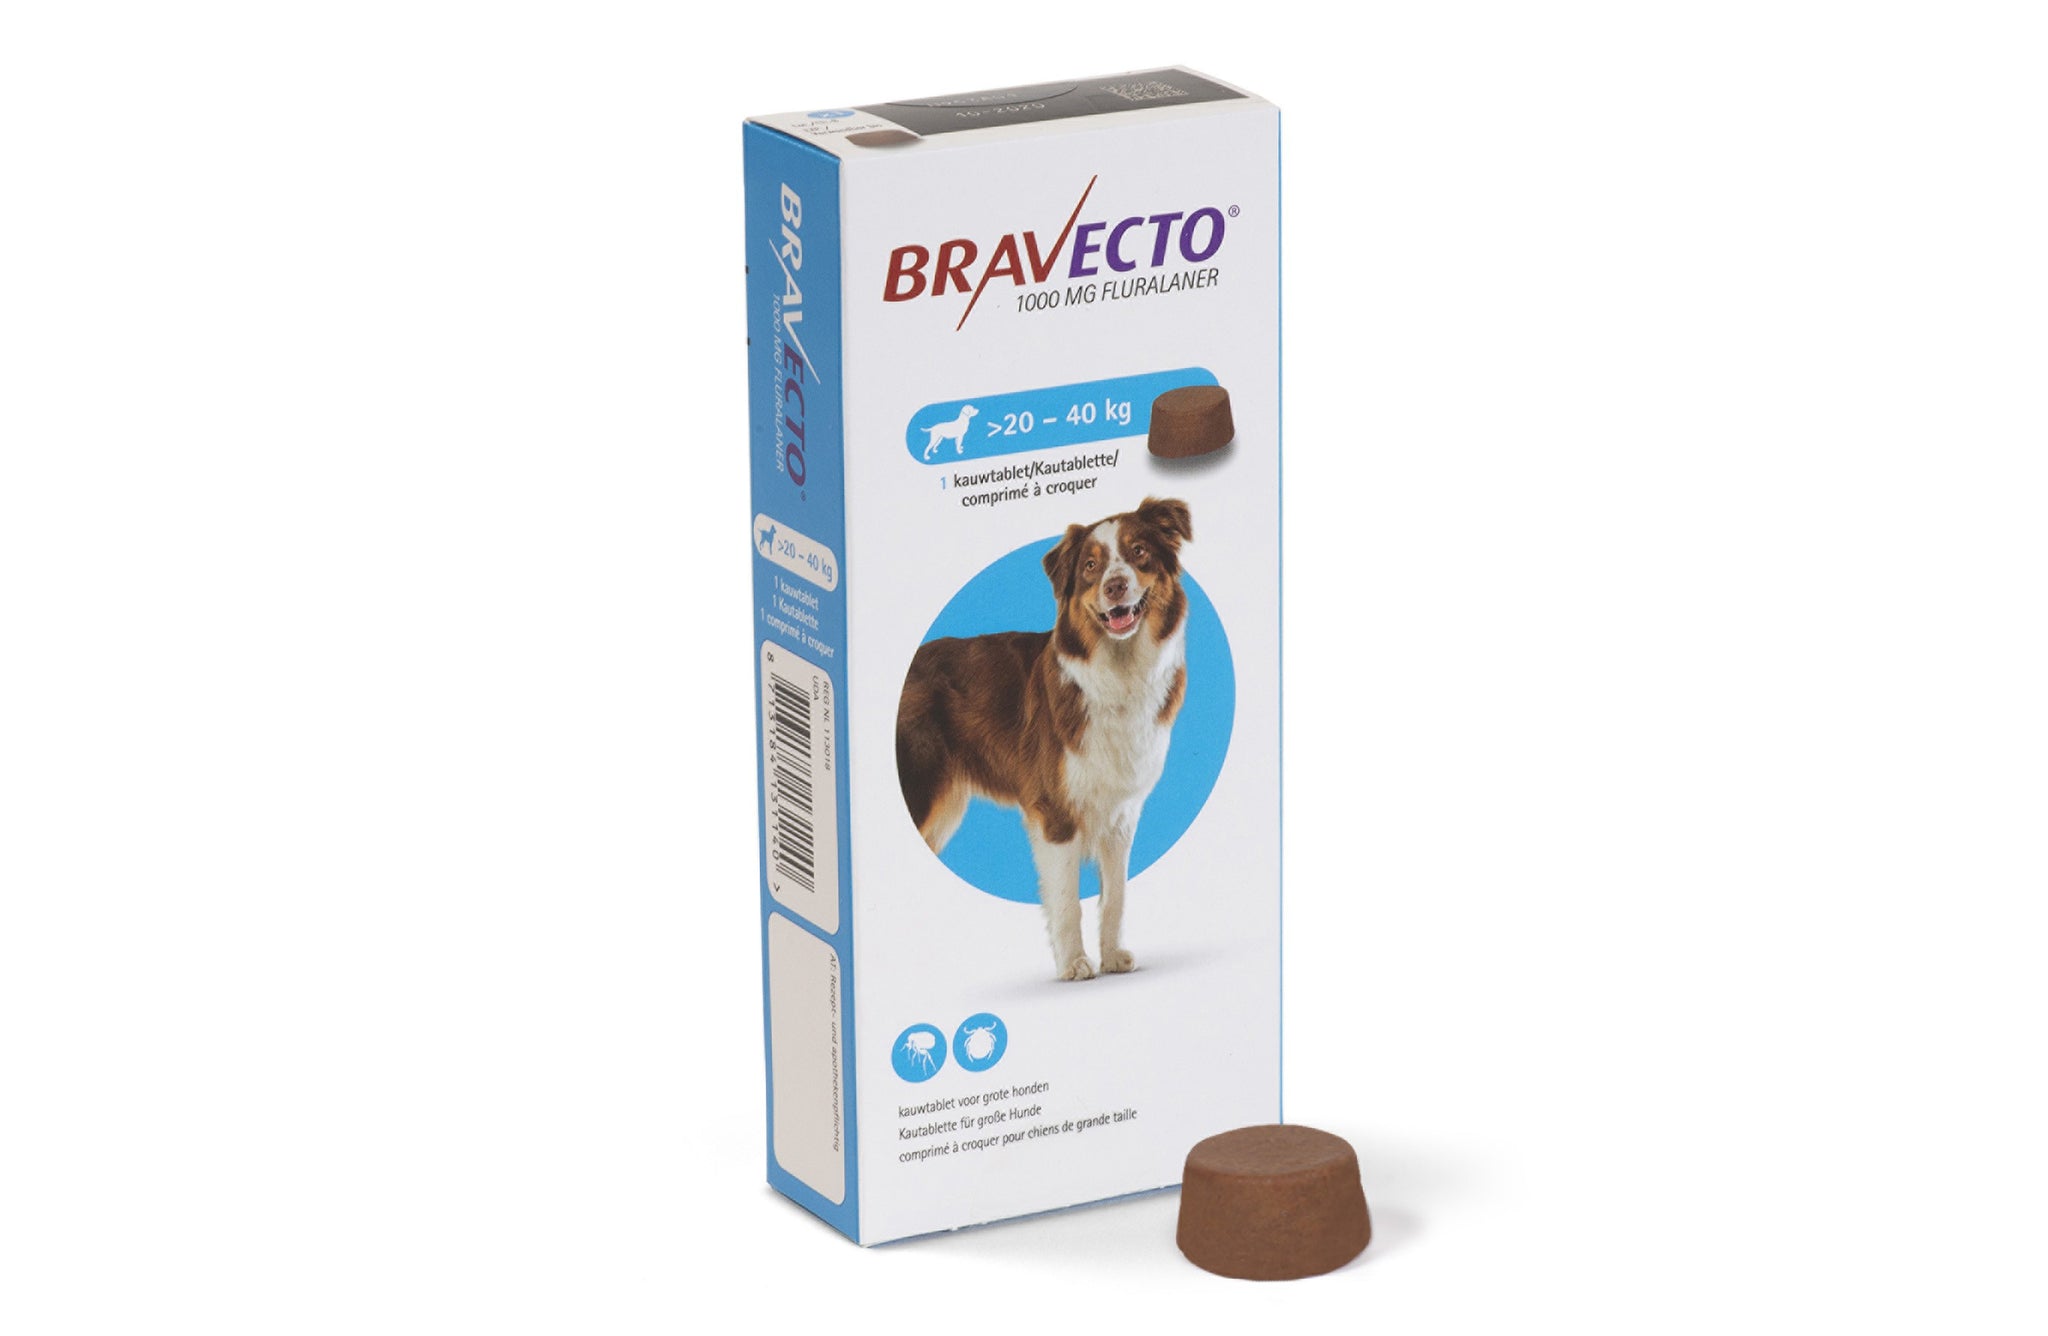 Bravecto – The Dog Club Pet